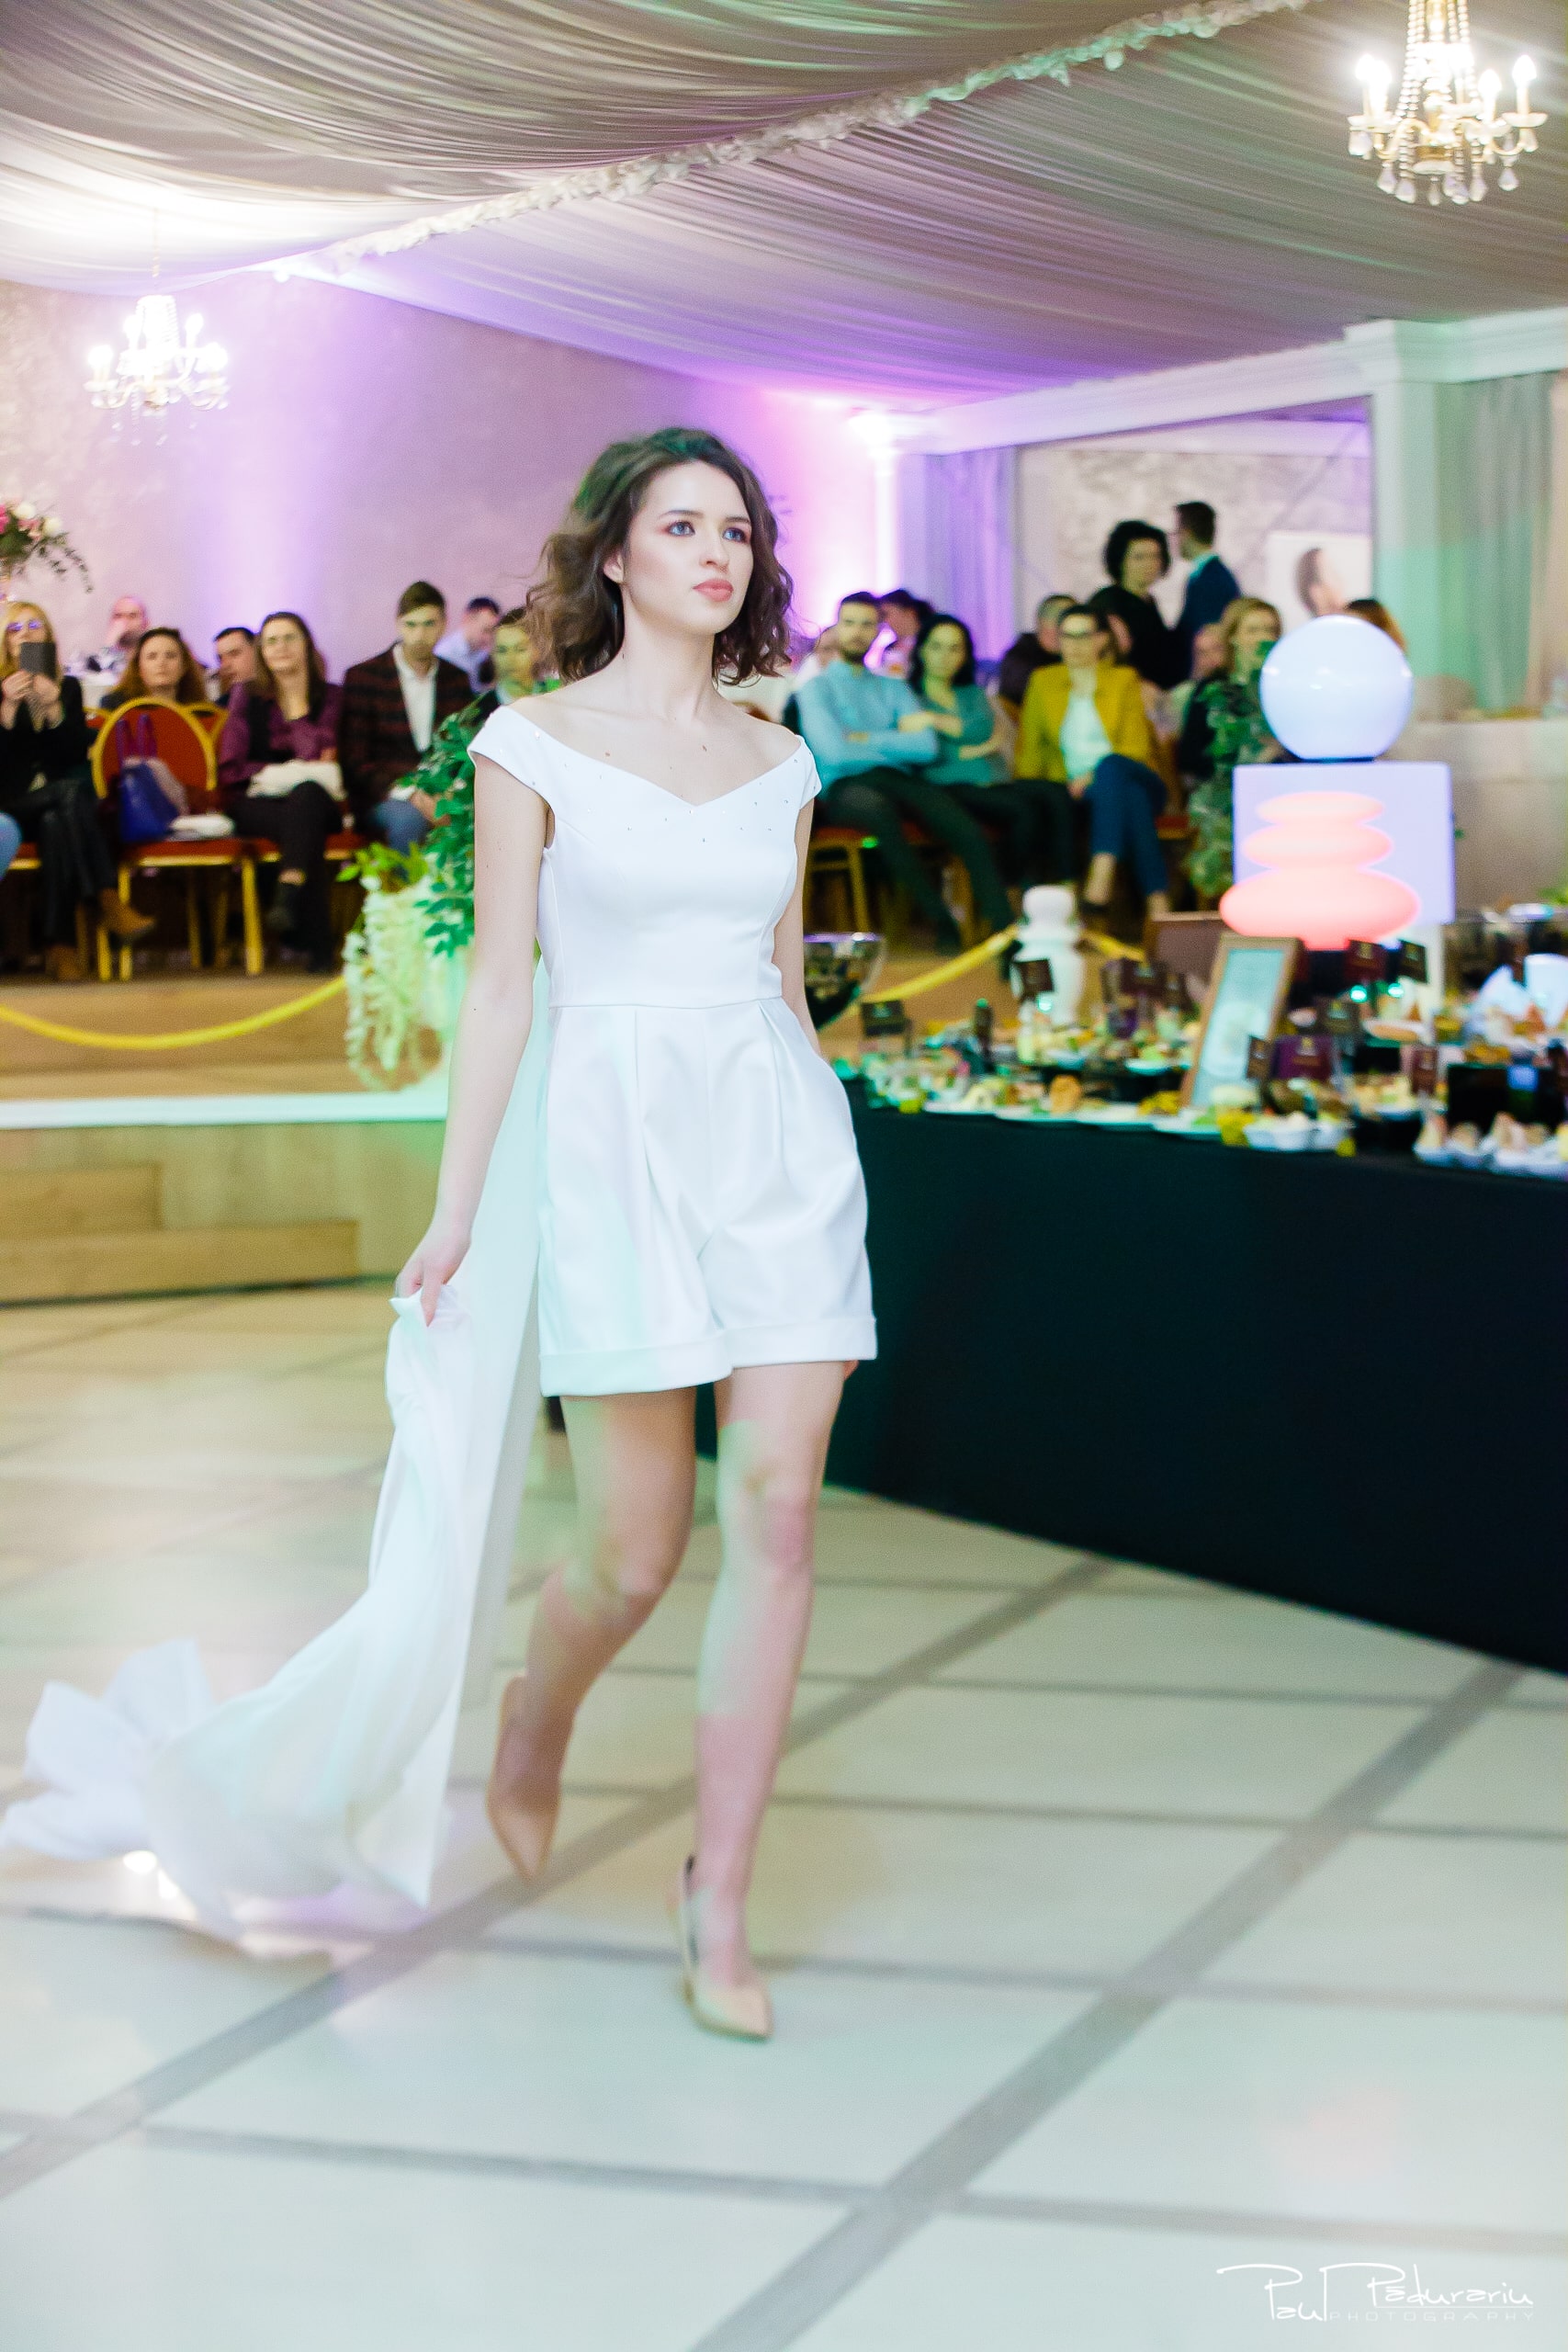 Modern Bride Edith Val colectie rochie mireasa 2019 - fotograf profesionist iasi paul padurariu | nunta iasi 2